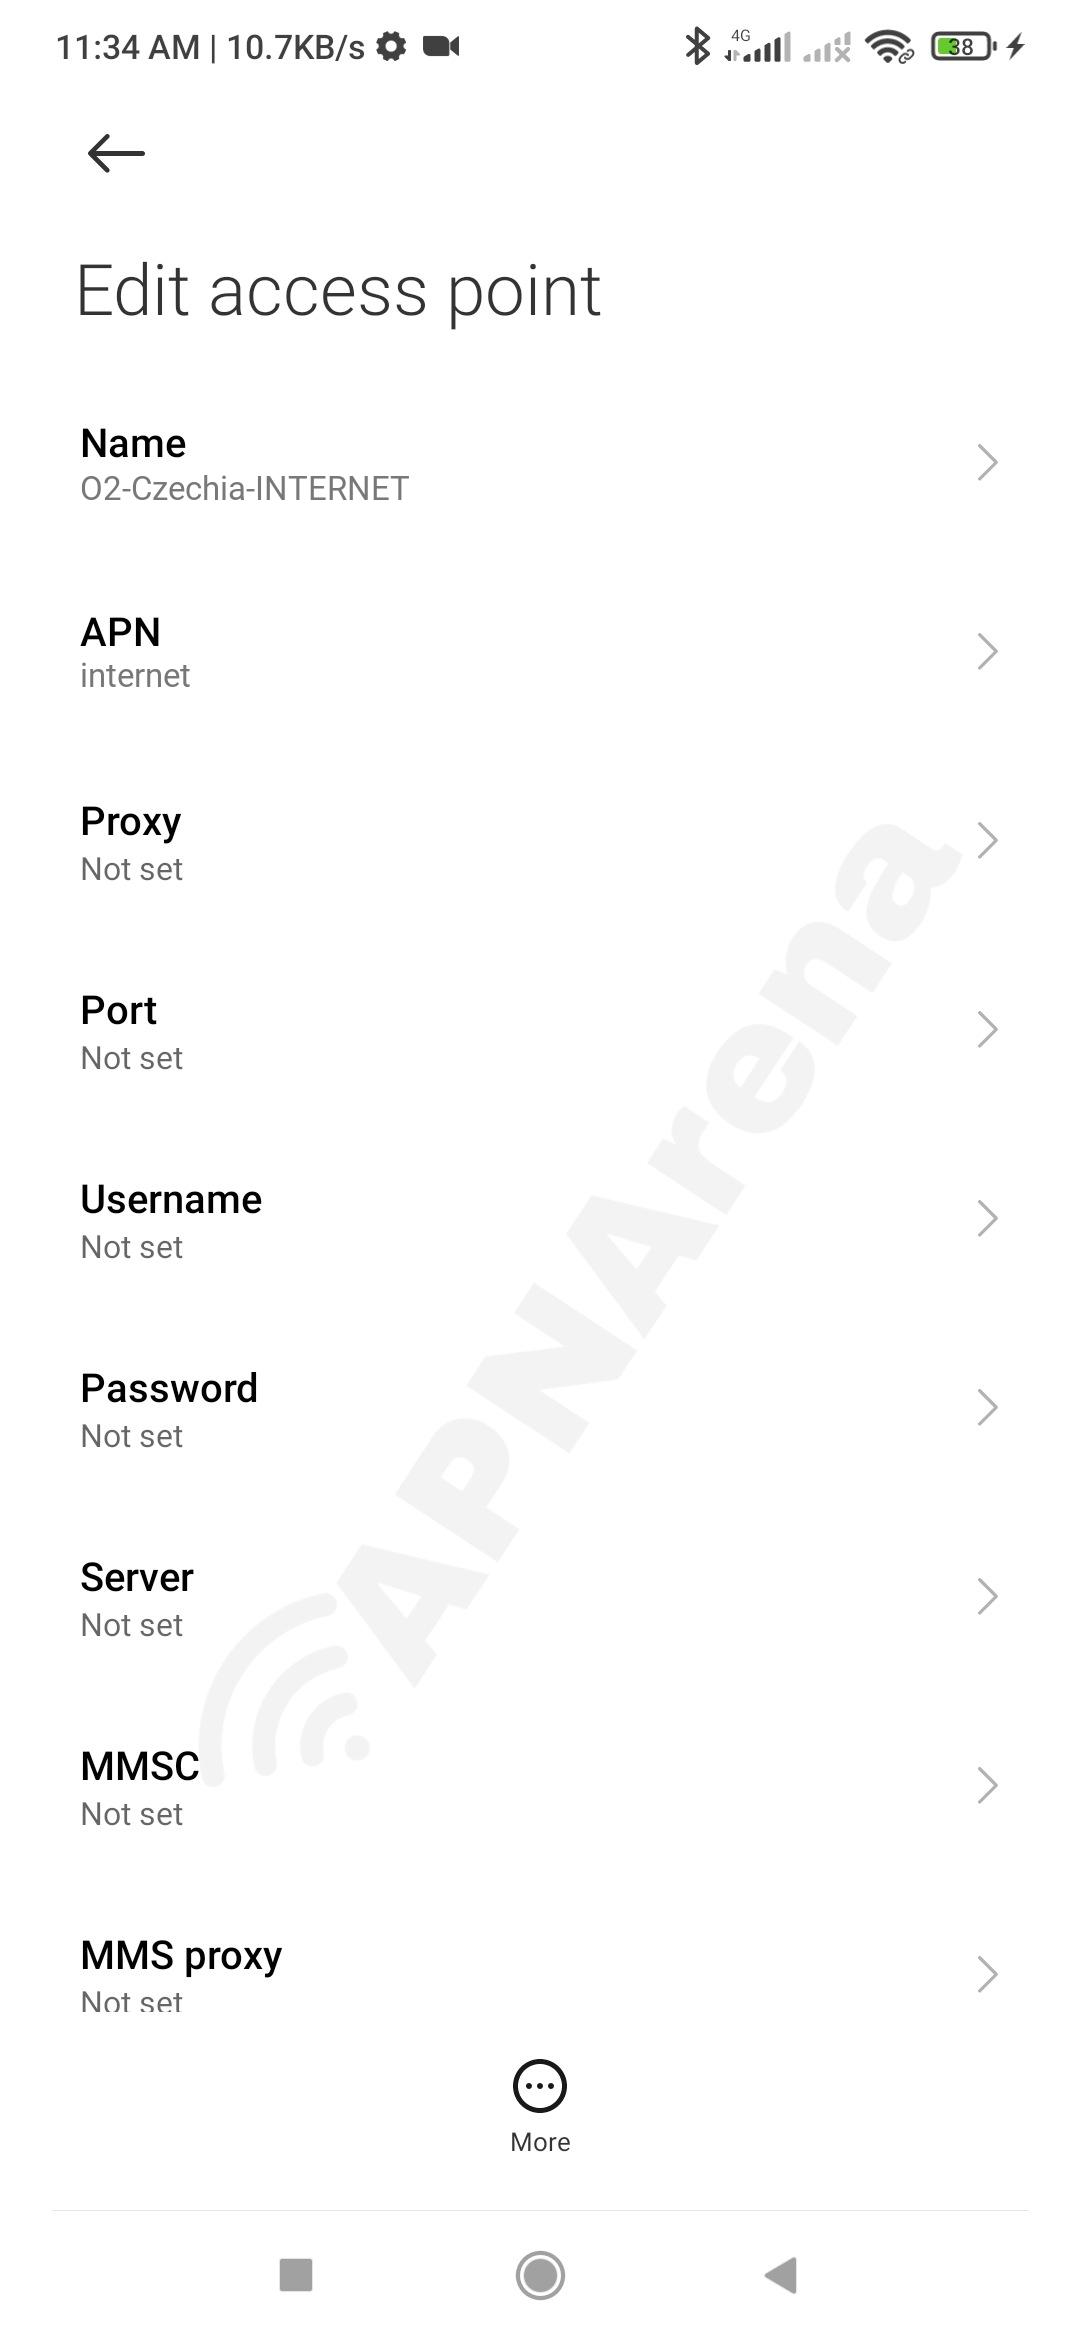 O2 Czechia (Eurotel) APN Settings for Android